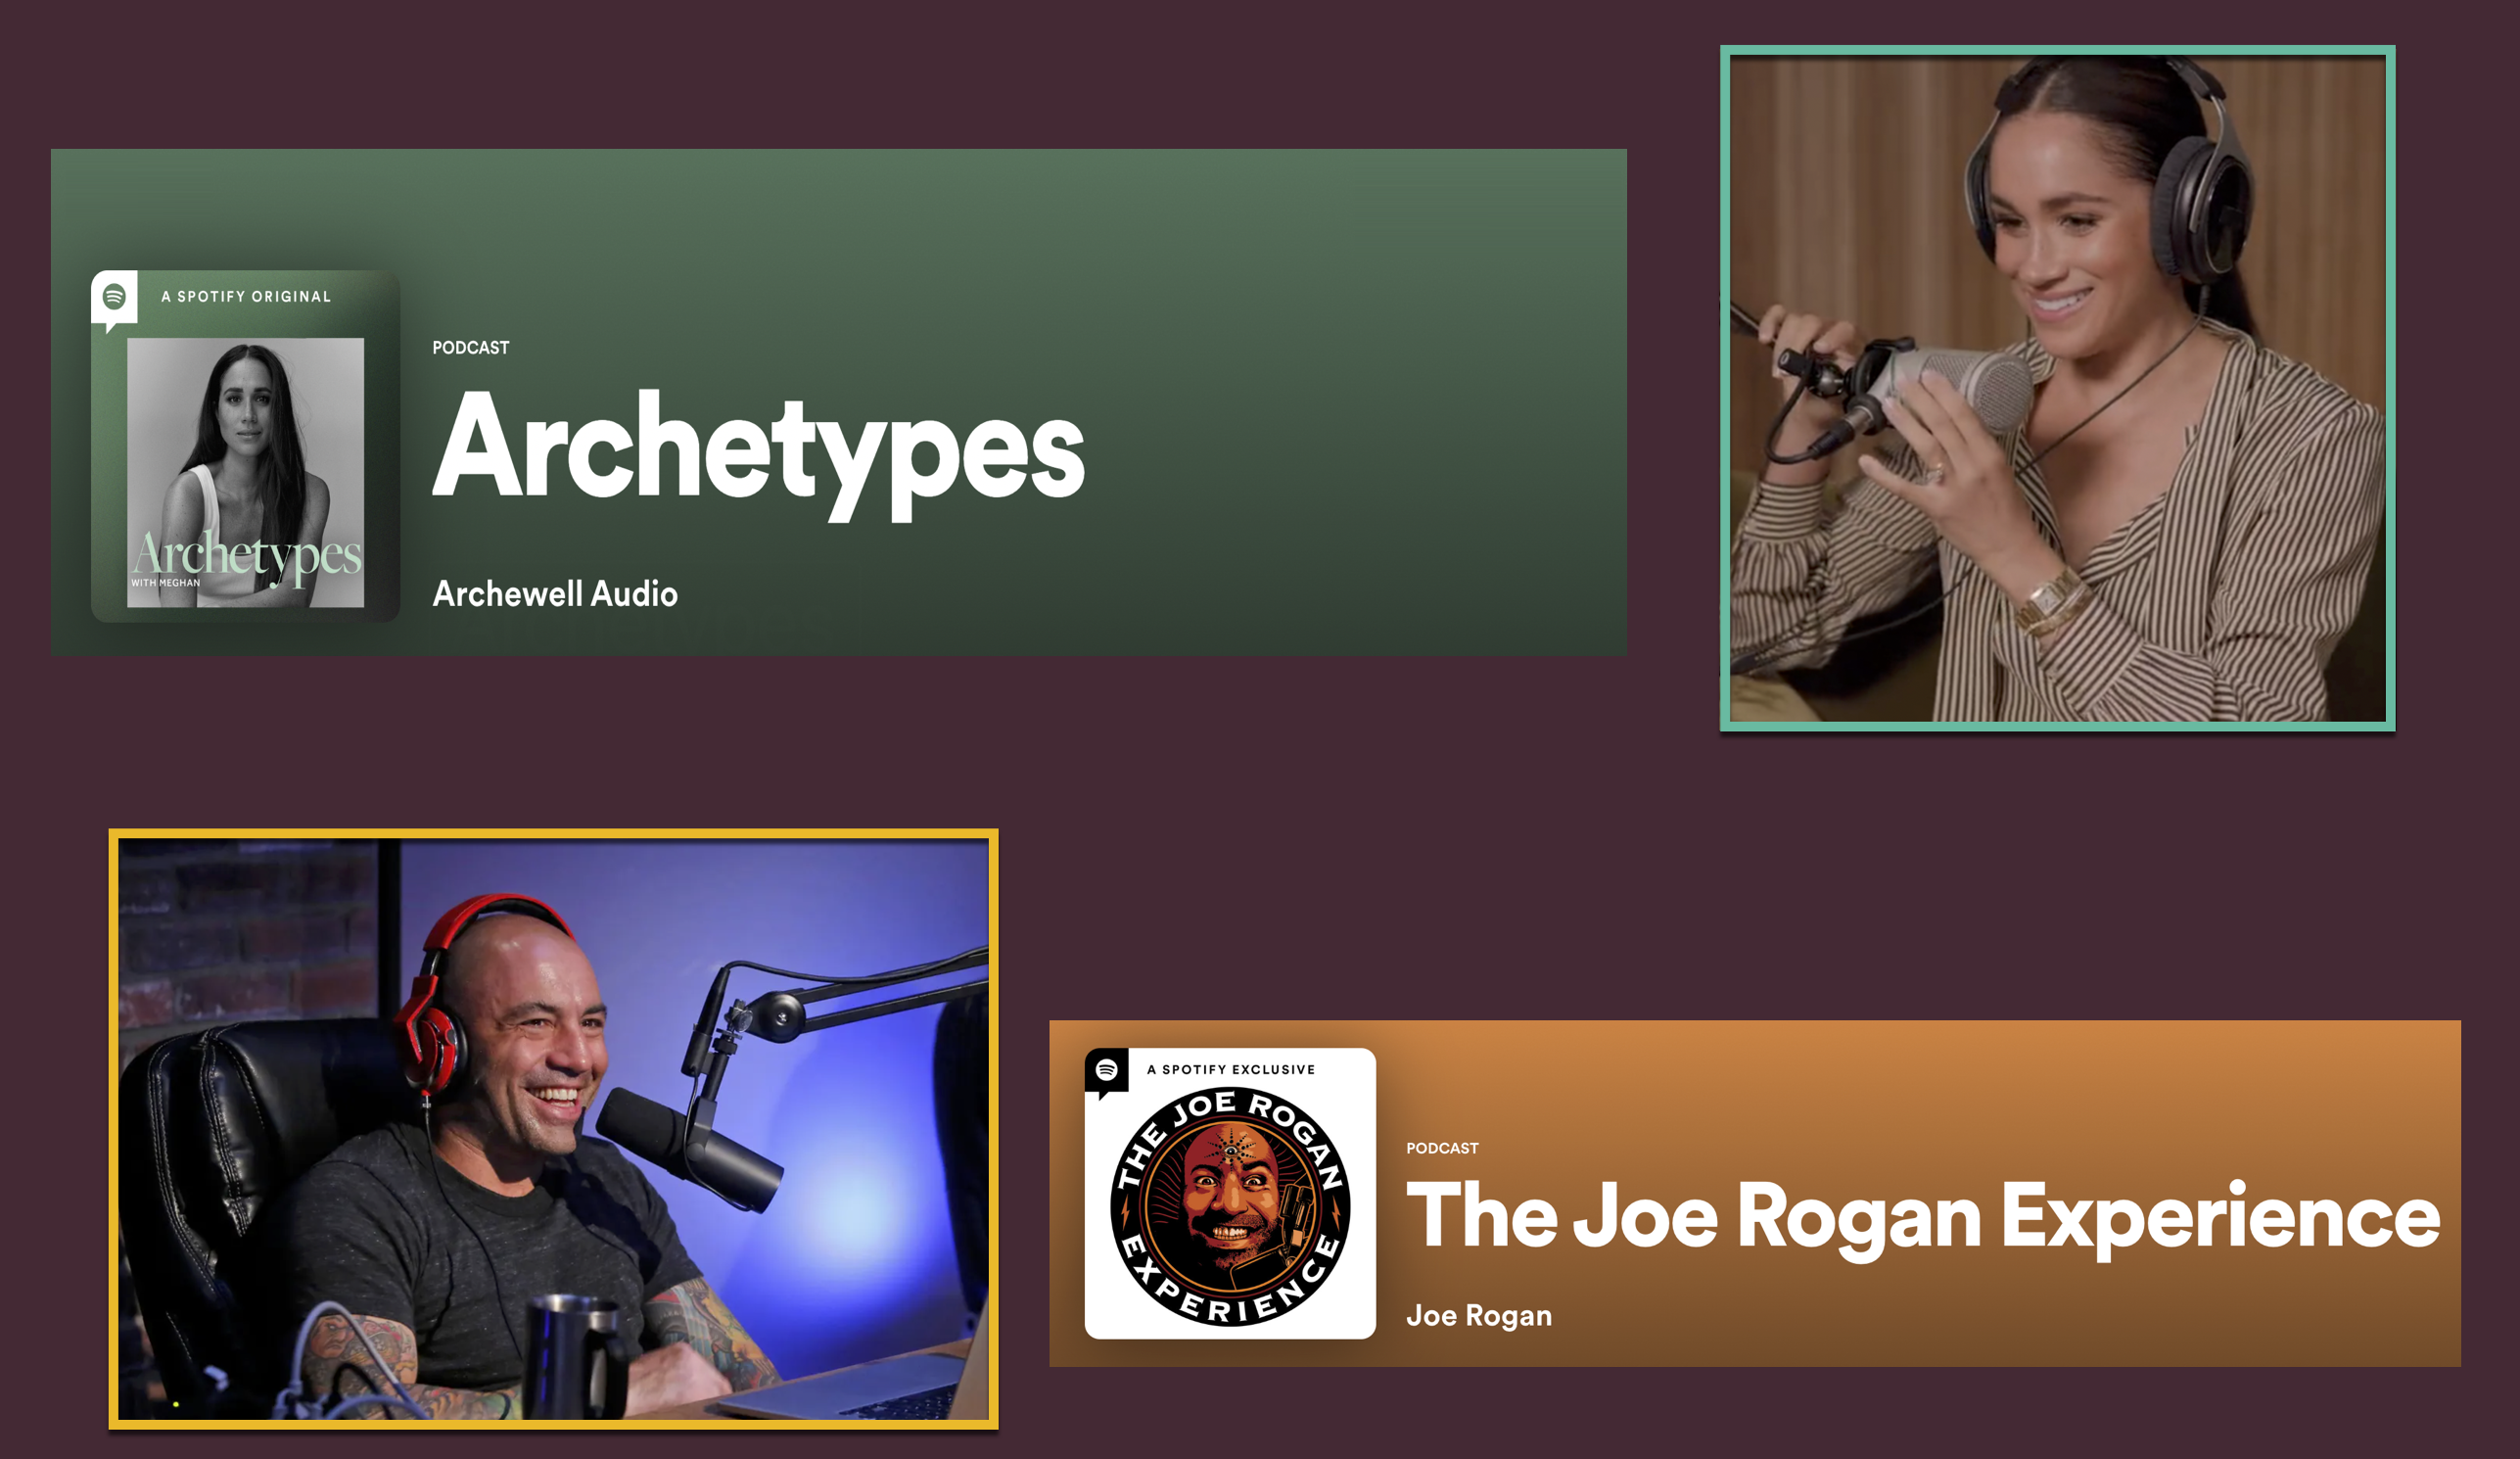 Meghan Markle's Spotify podcast 'Archetypes' overtakes The Joe Rogan Experience